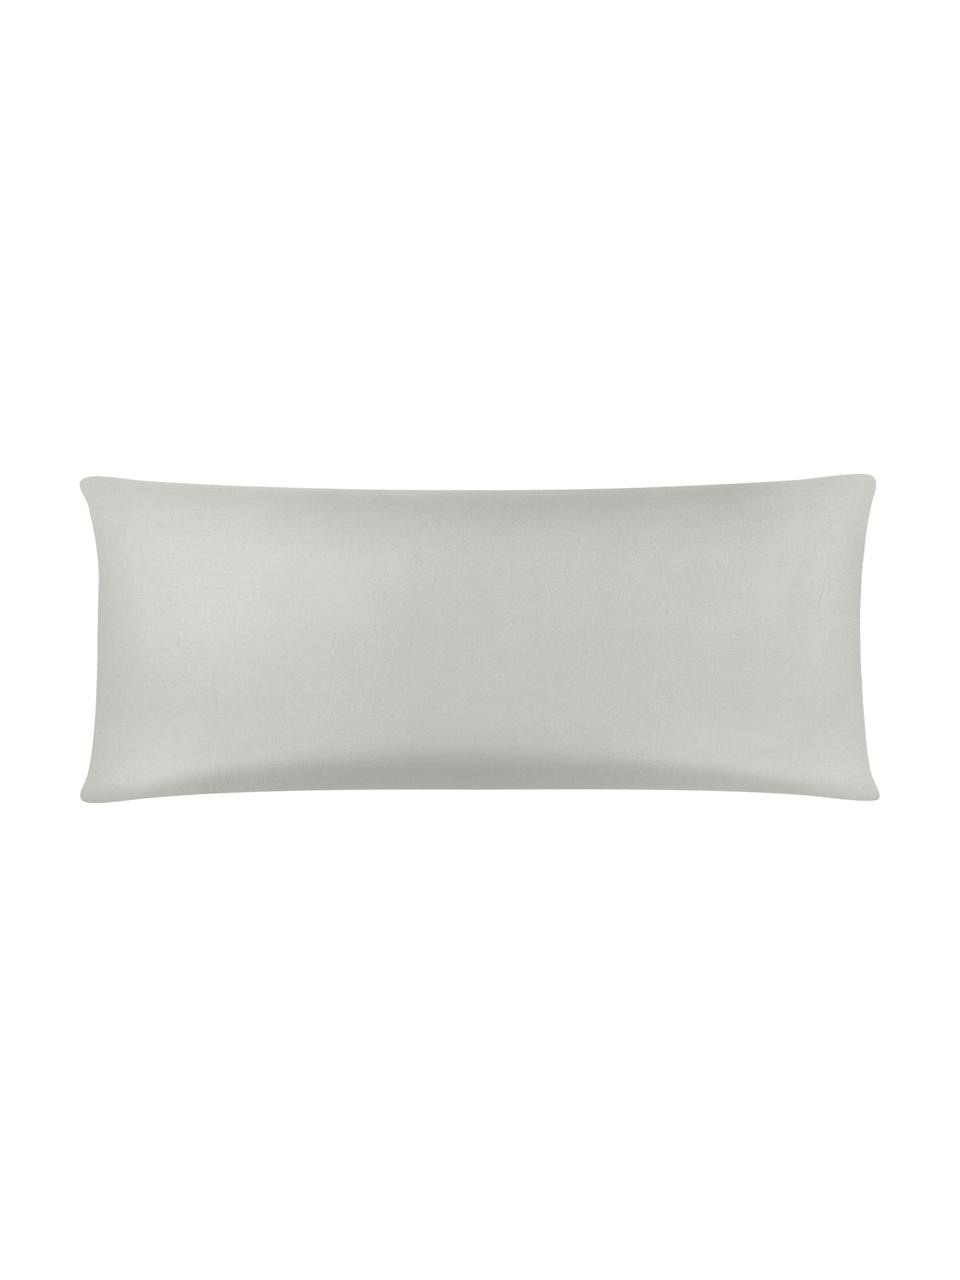 Funda de almohada de satén Comfort, 45 x 110 cm, Gris claro, An 45 x L 110 cm